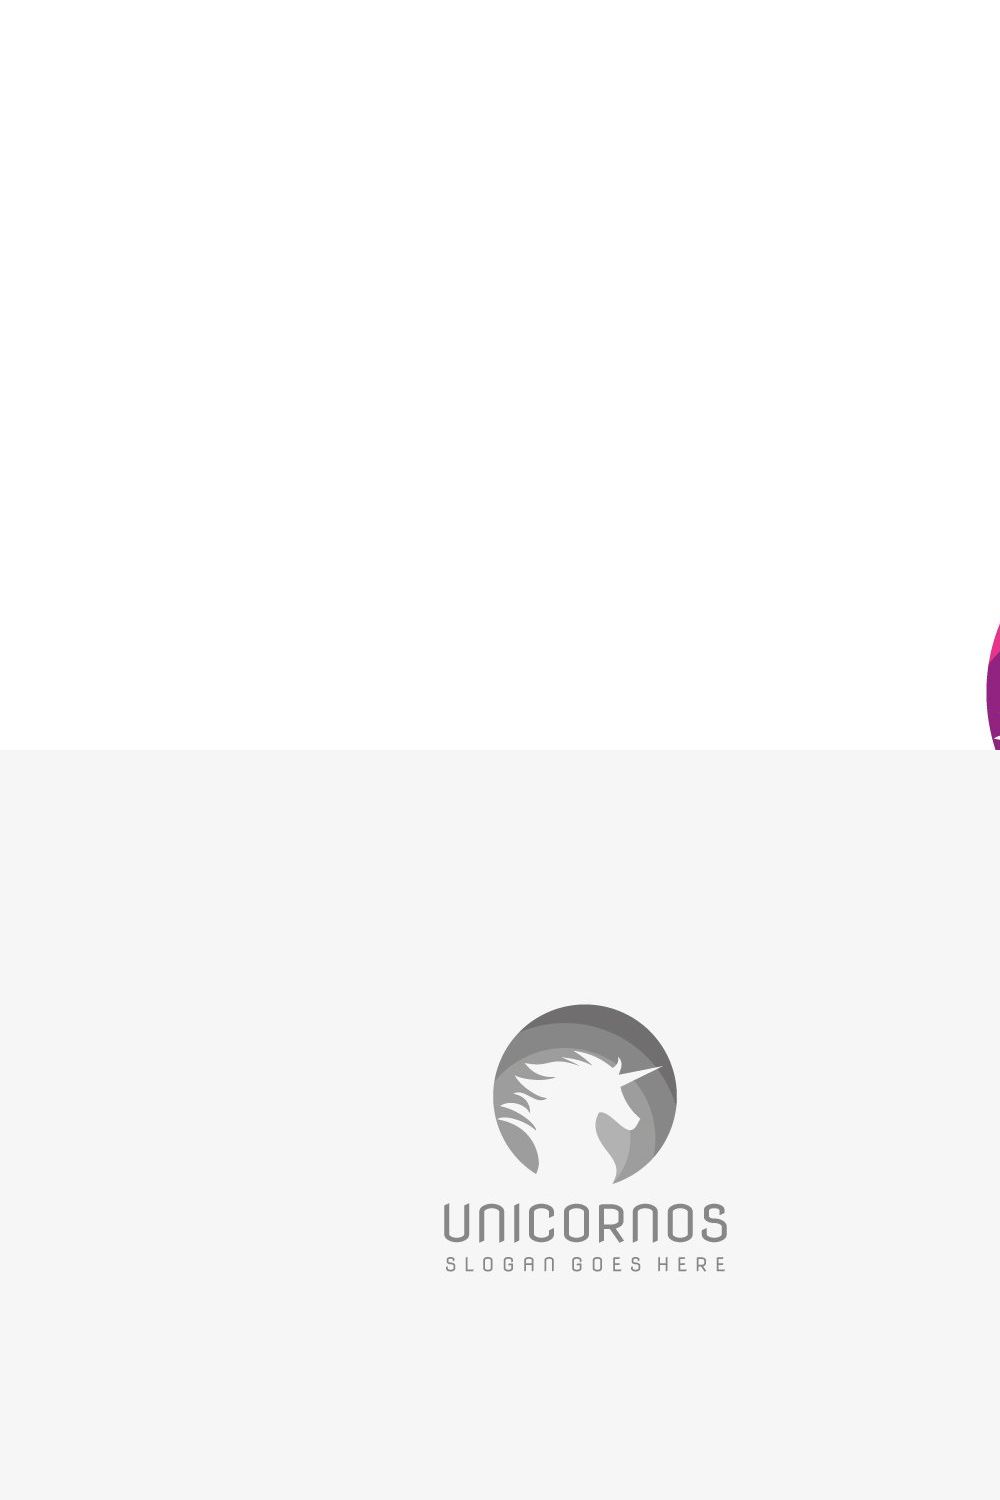 Unicorn Logo pinterest preview image.